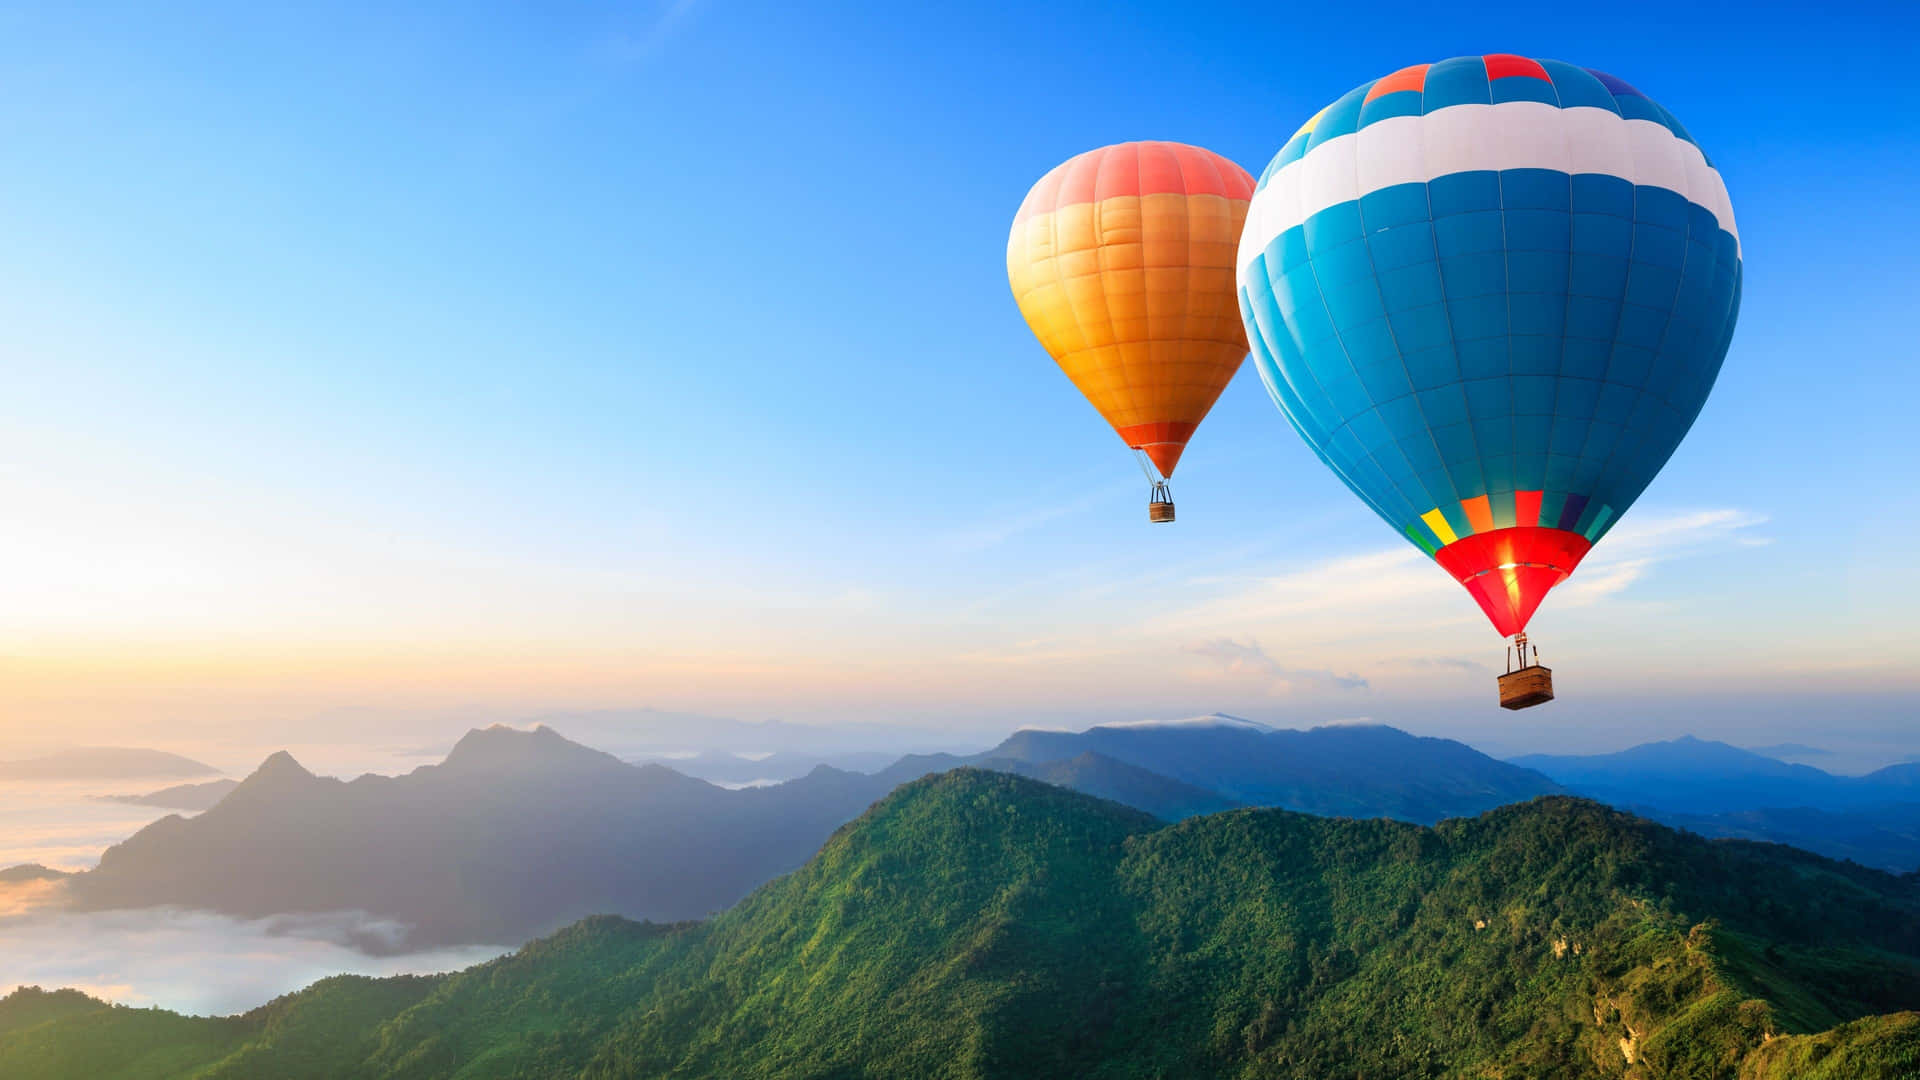 Hot Air Balloons Over Mountain Range Wallpaper